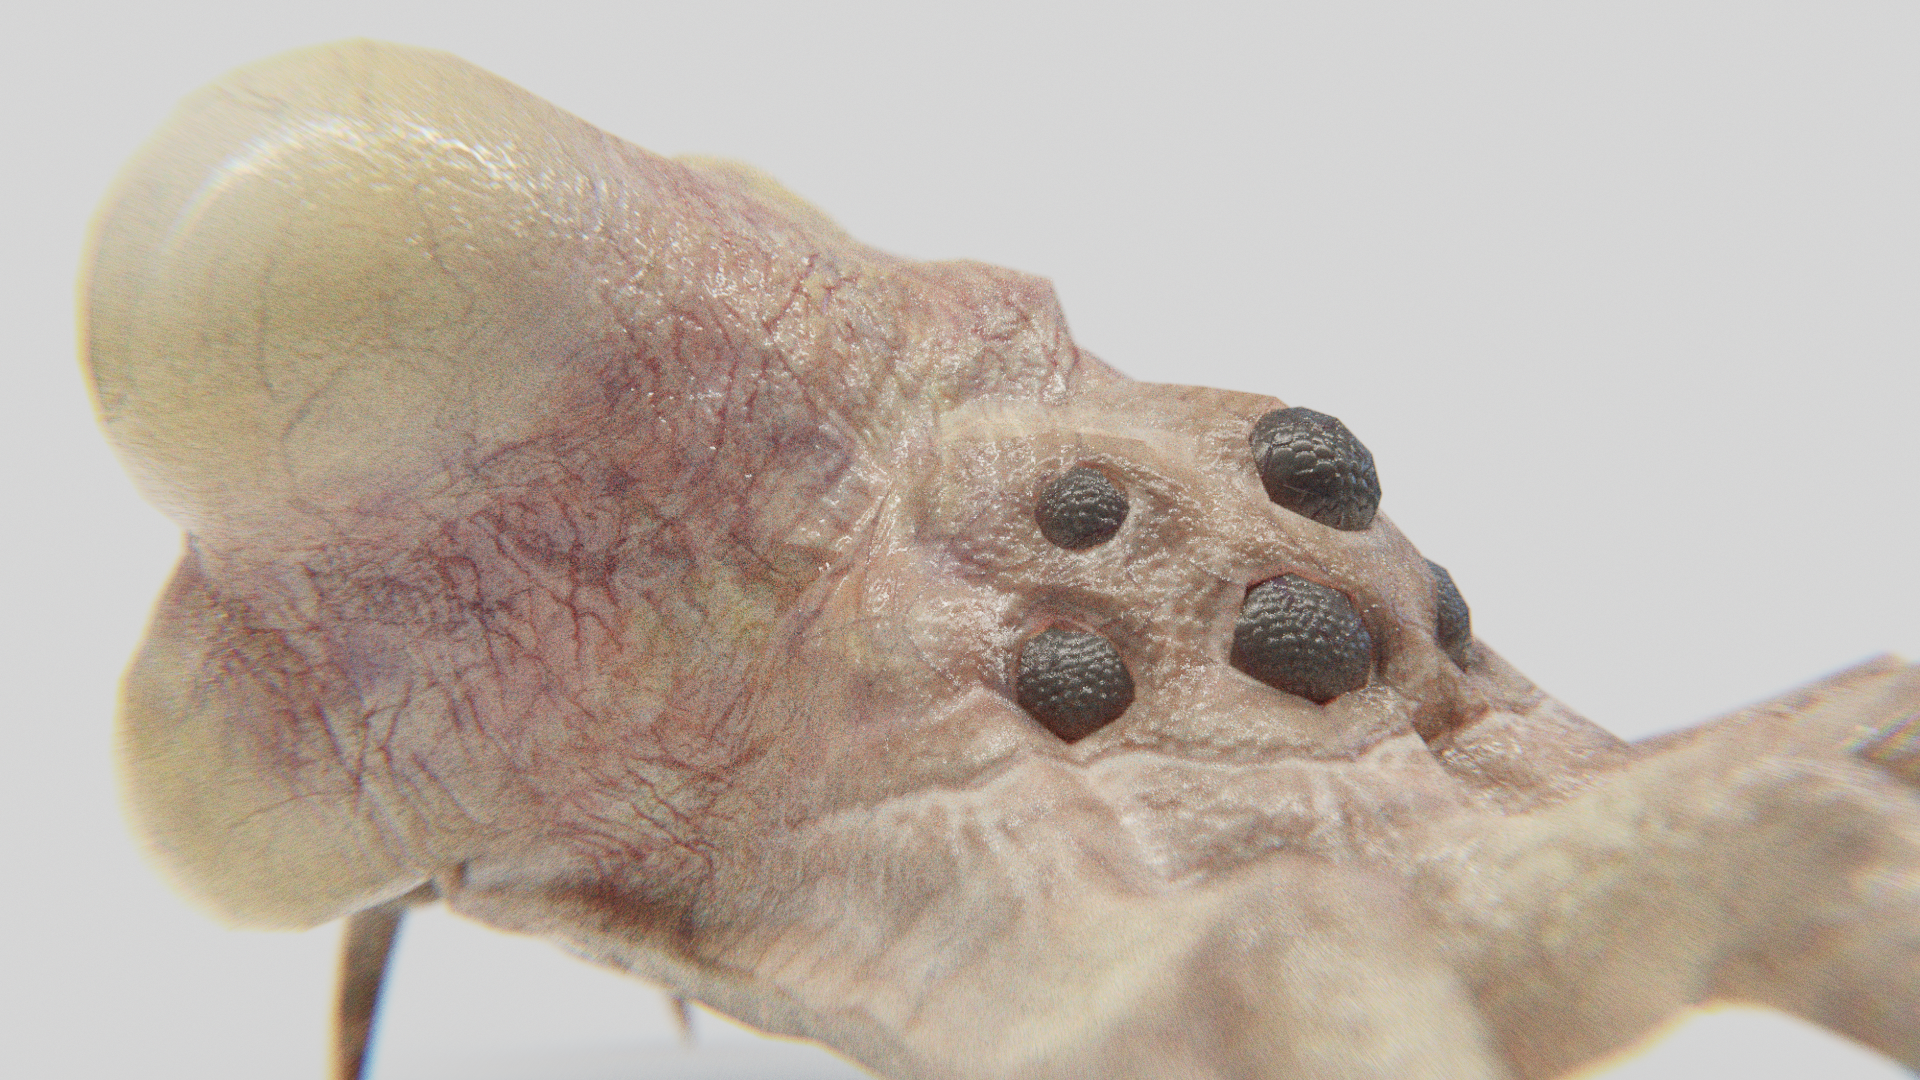 Kranion Plague Spreader Close-up - 3d Model of Facehugger or Headcrab